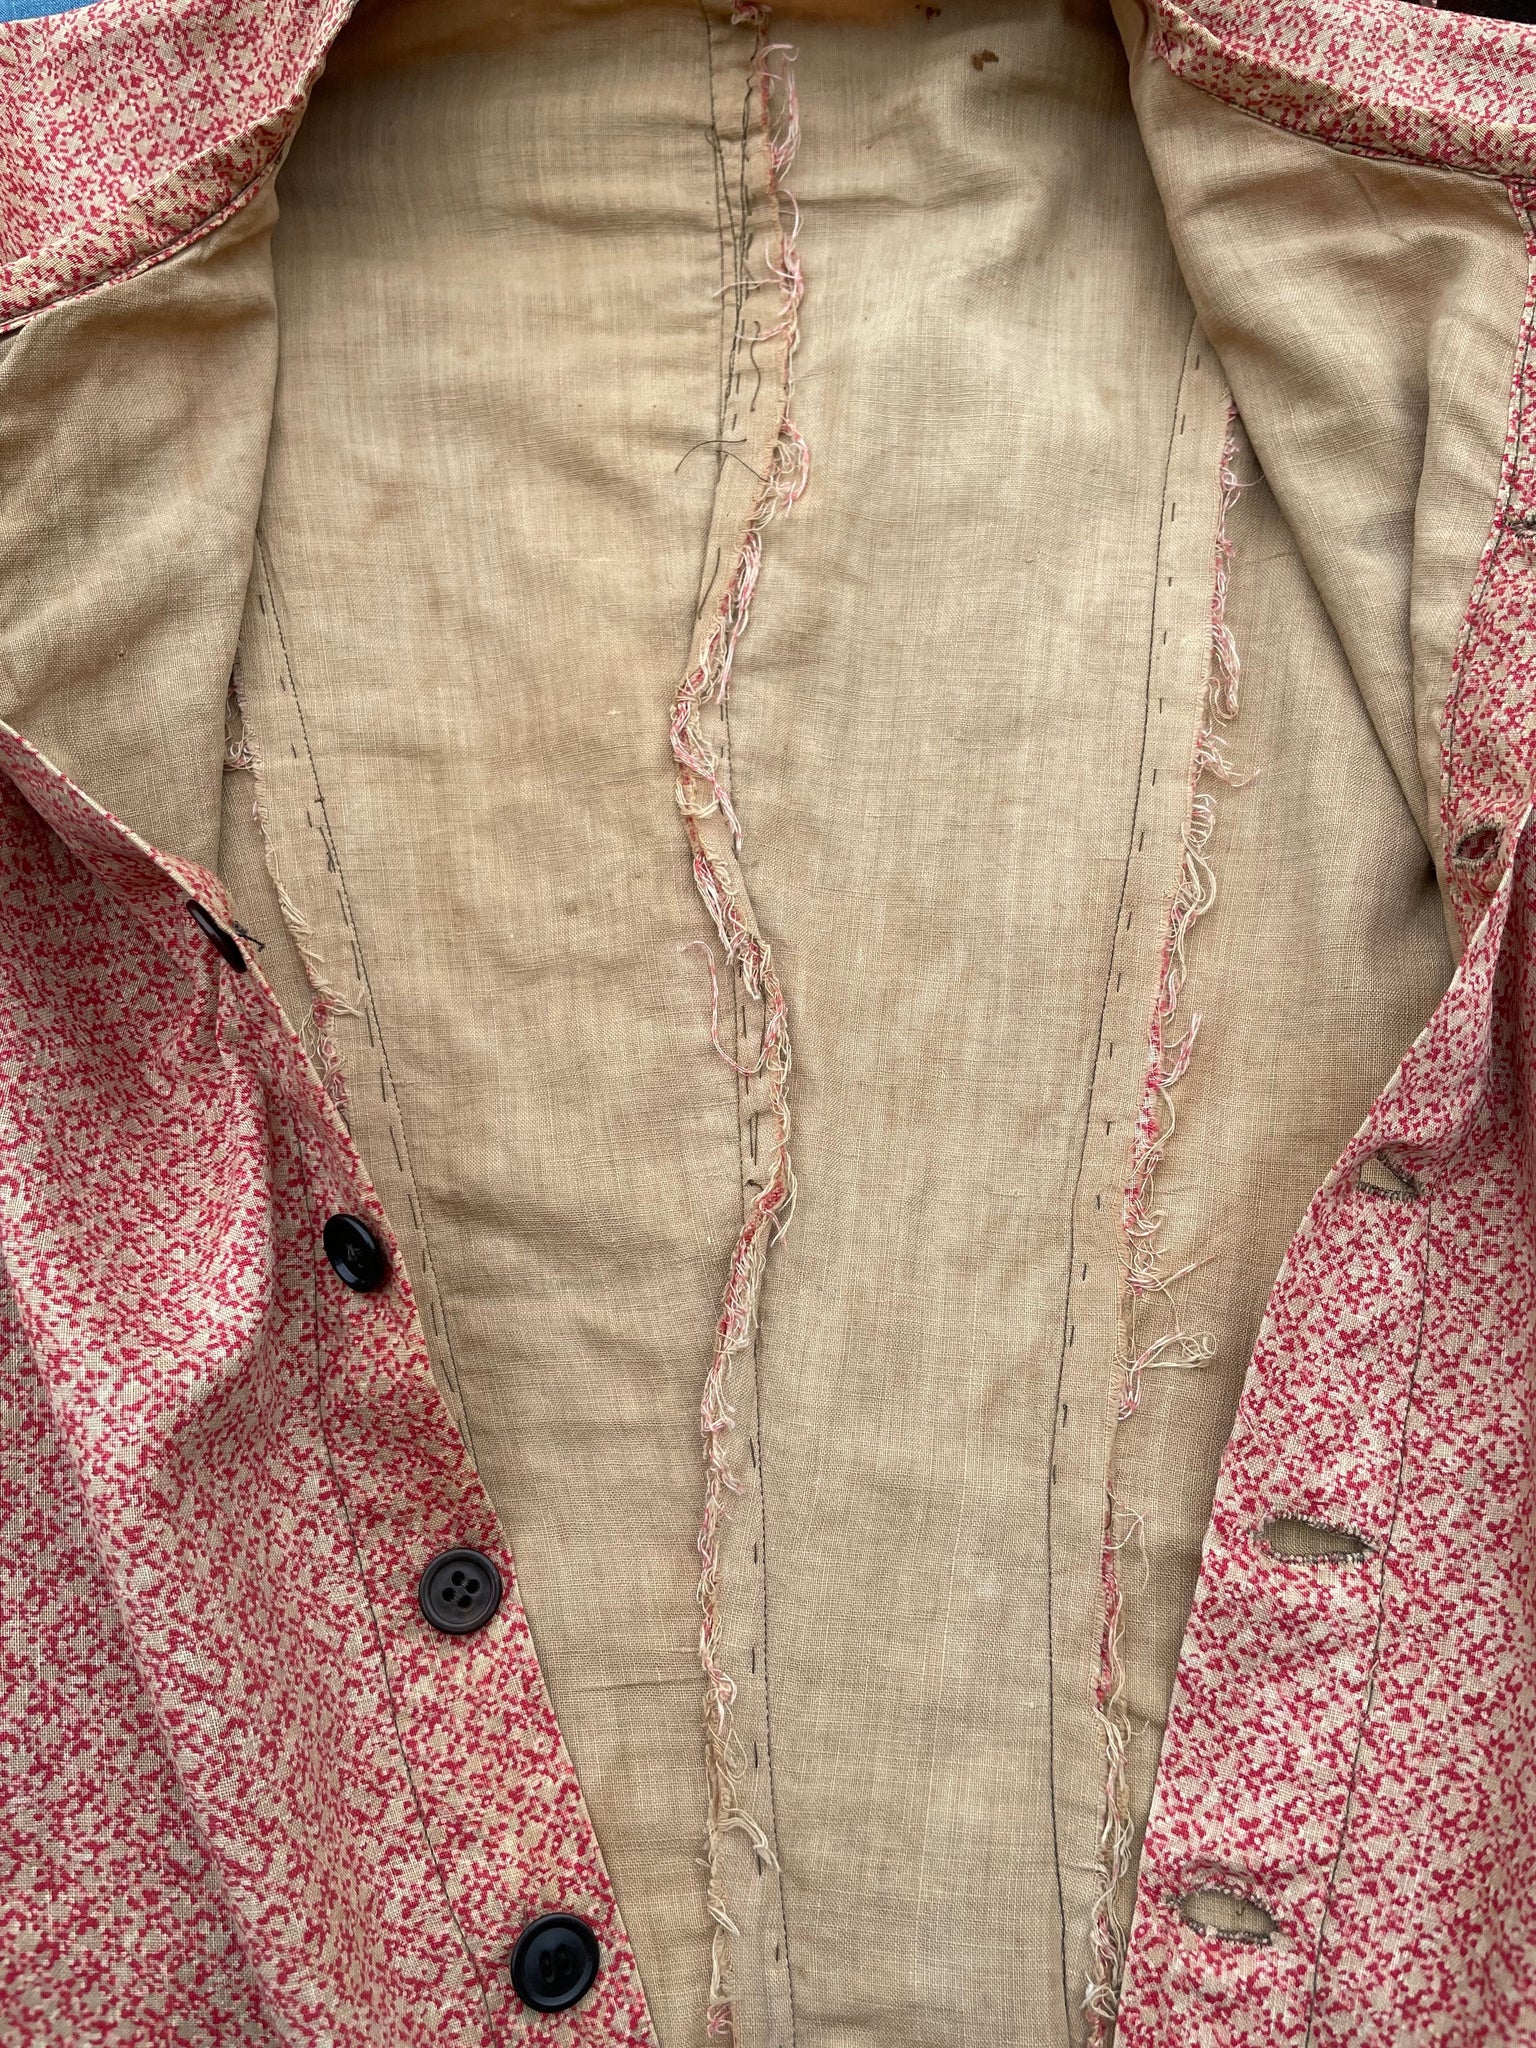 1870s Roller Print Cotton Prairie Dress